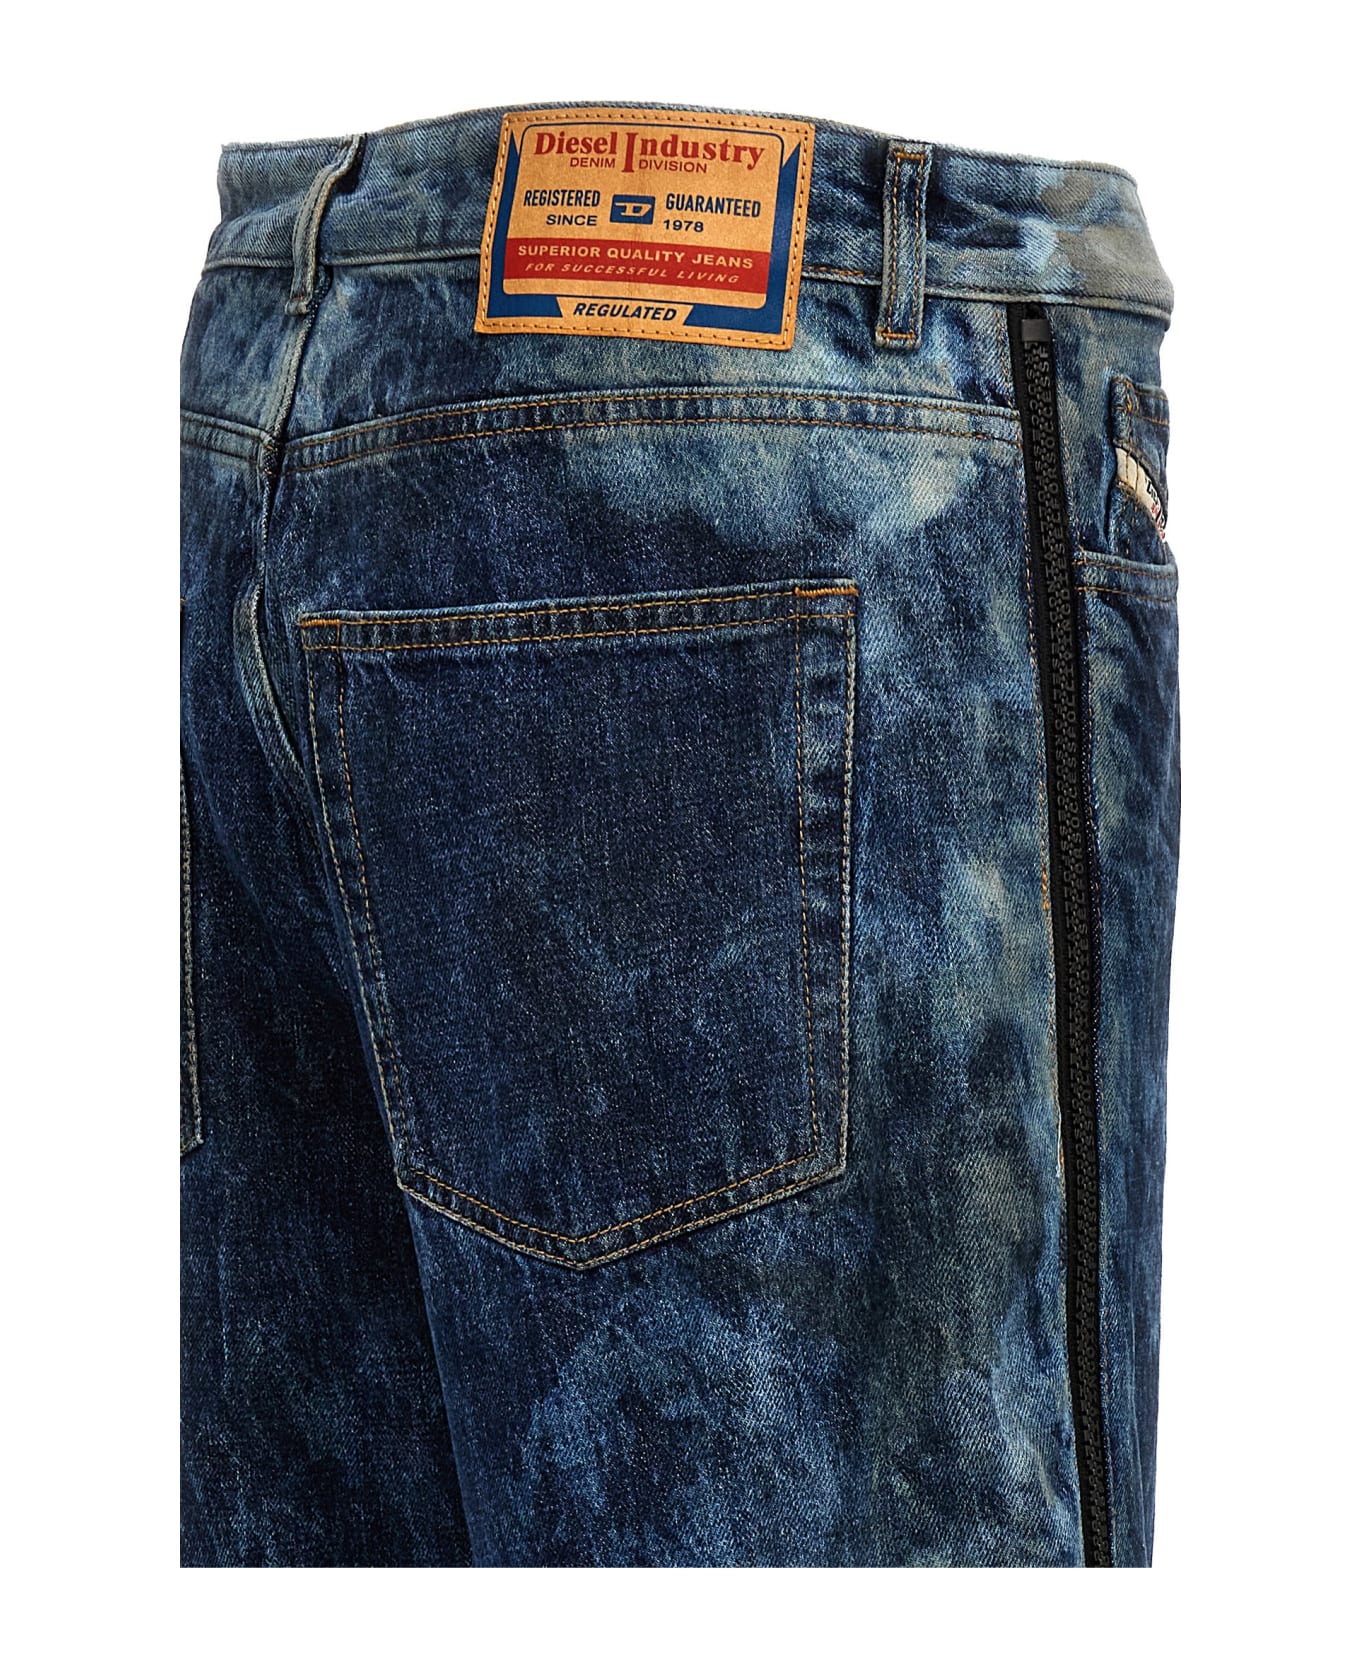 Diesel 'd-rise 0pgax' Jeans - Blue